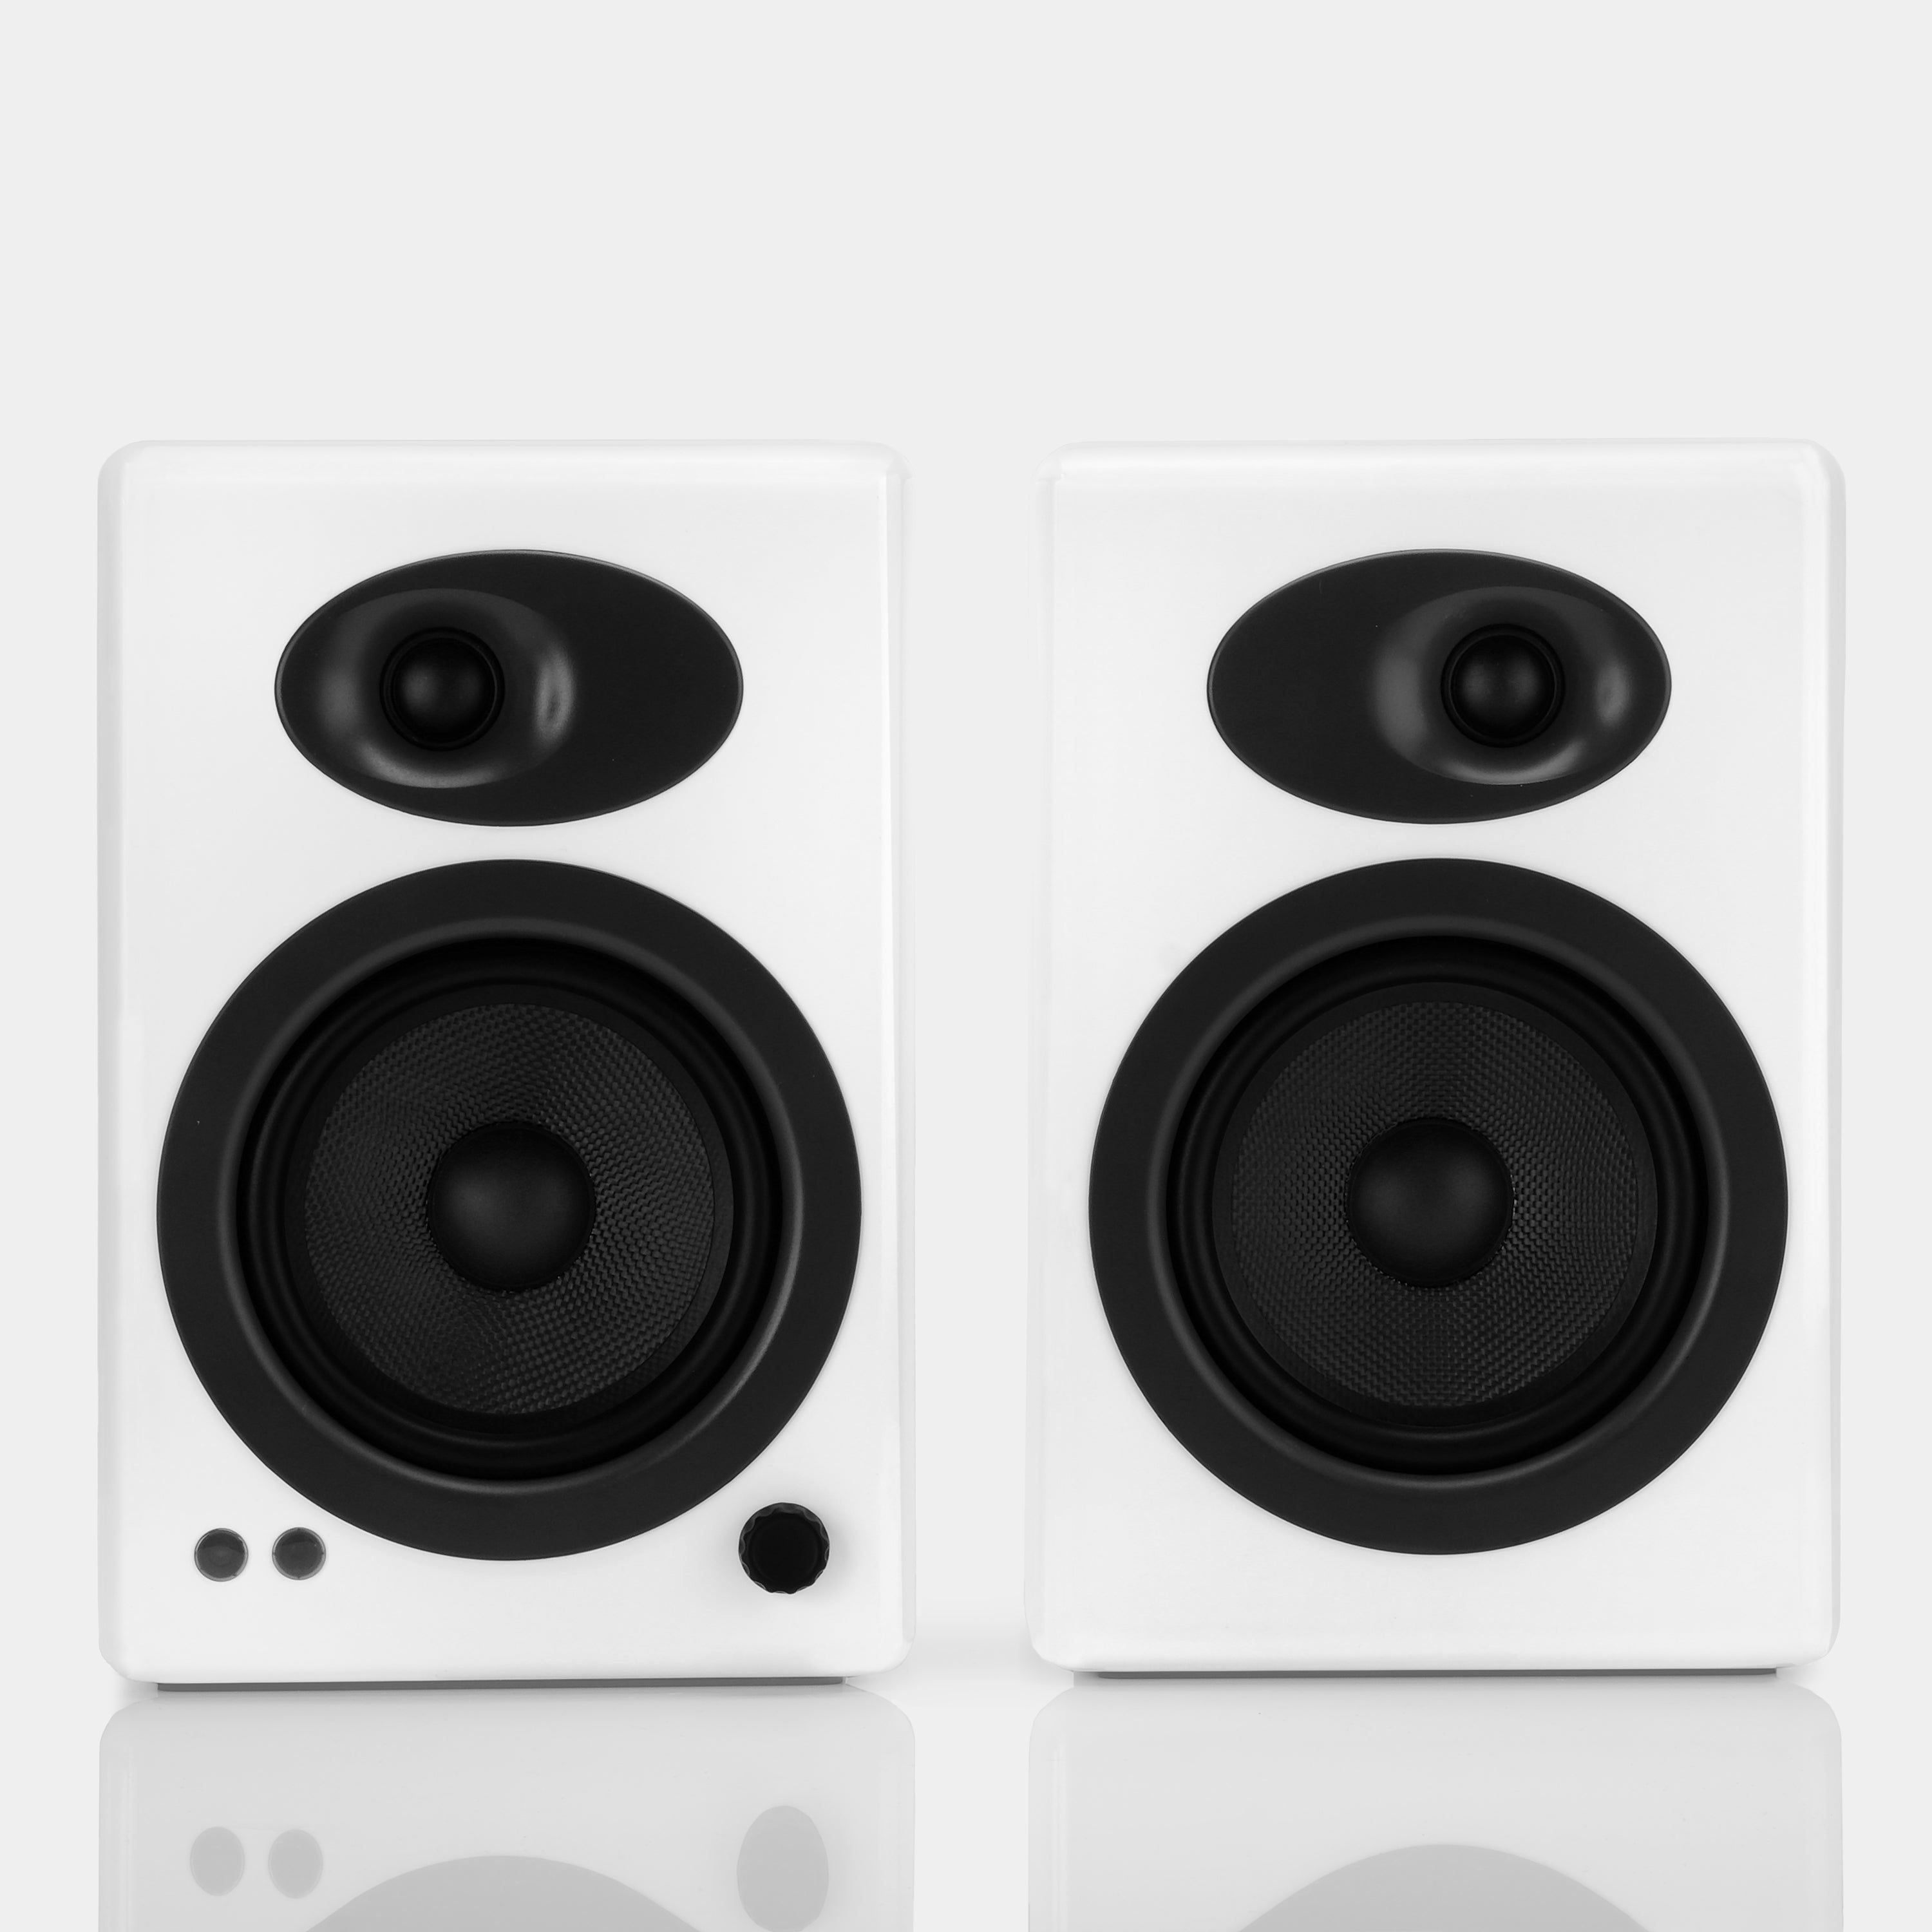 Audioengine A5+ Speakers Sound Amazing on Your Desktop